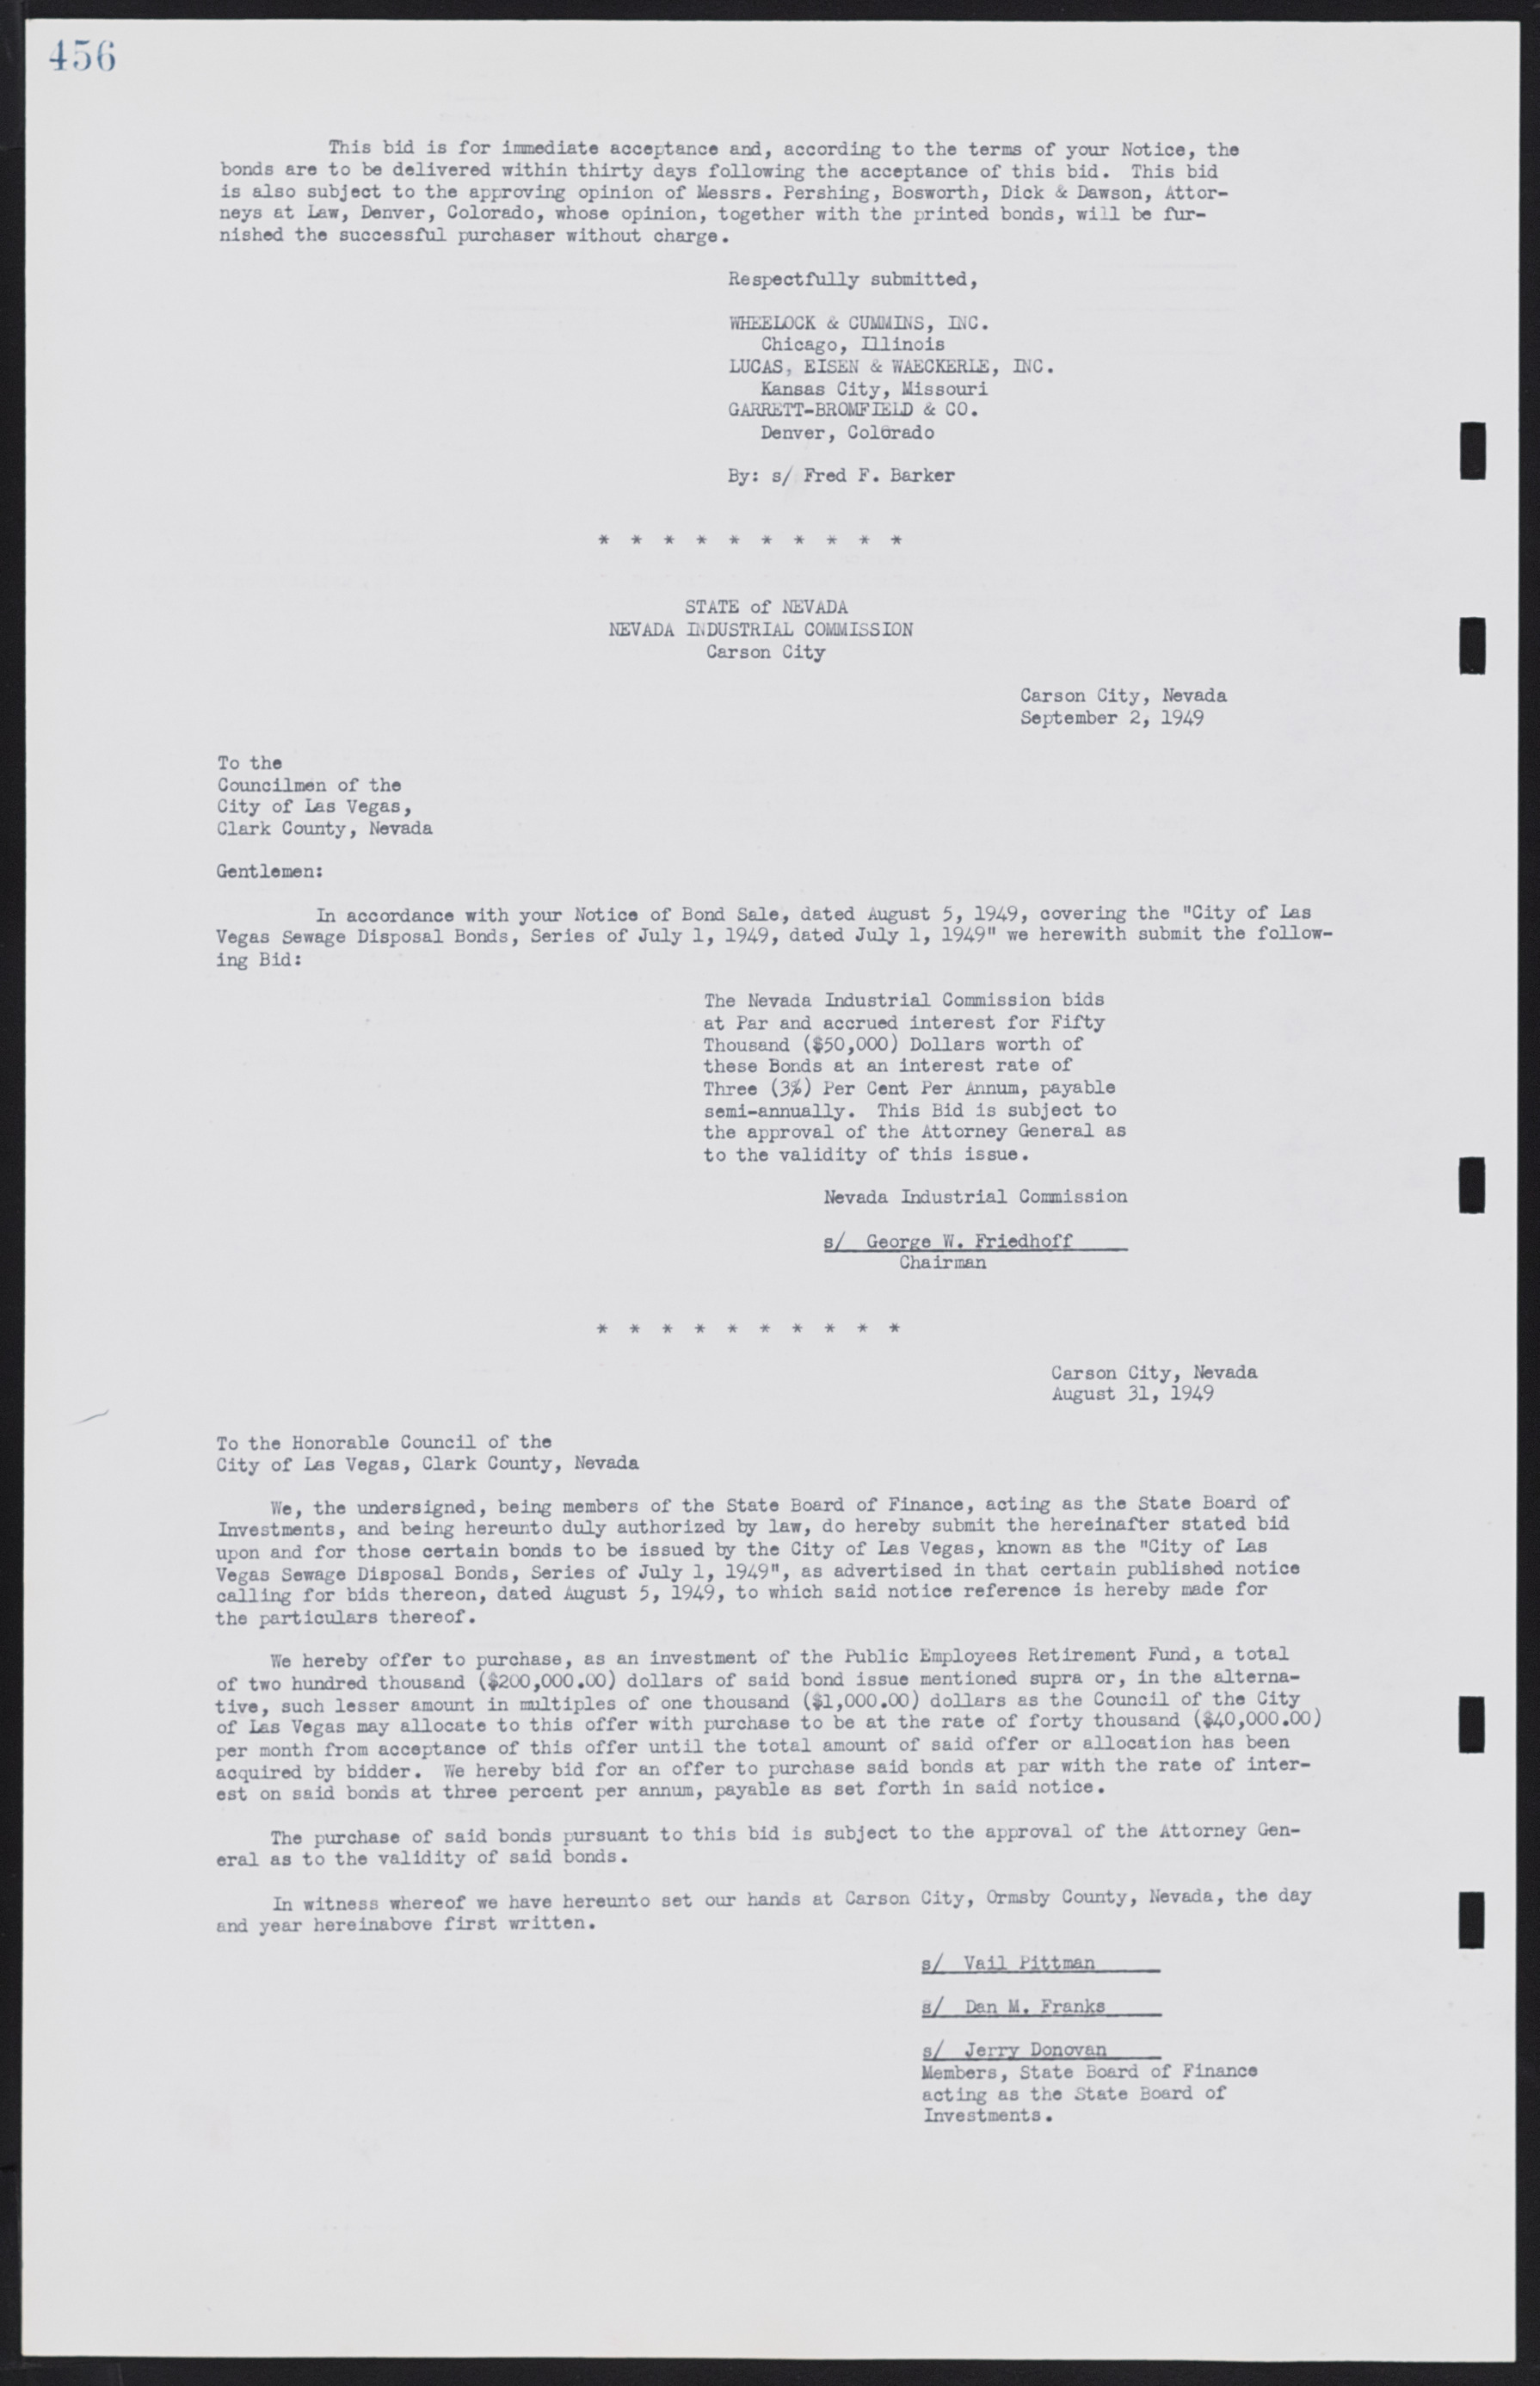 Las Vegas City Commission Minutes, January 7, 1947 to October 26, 1949, lvc000006-488